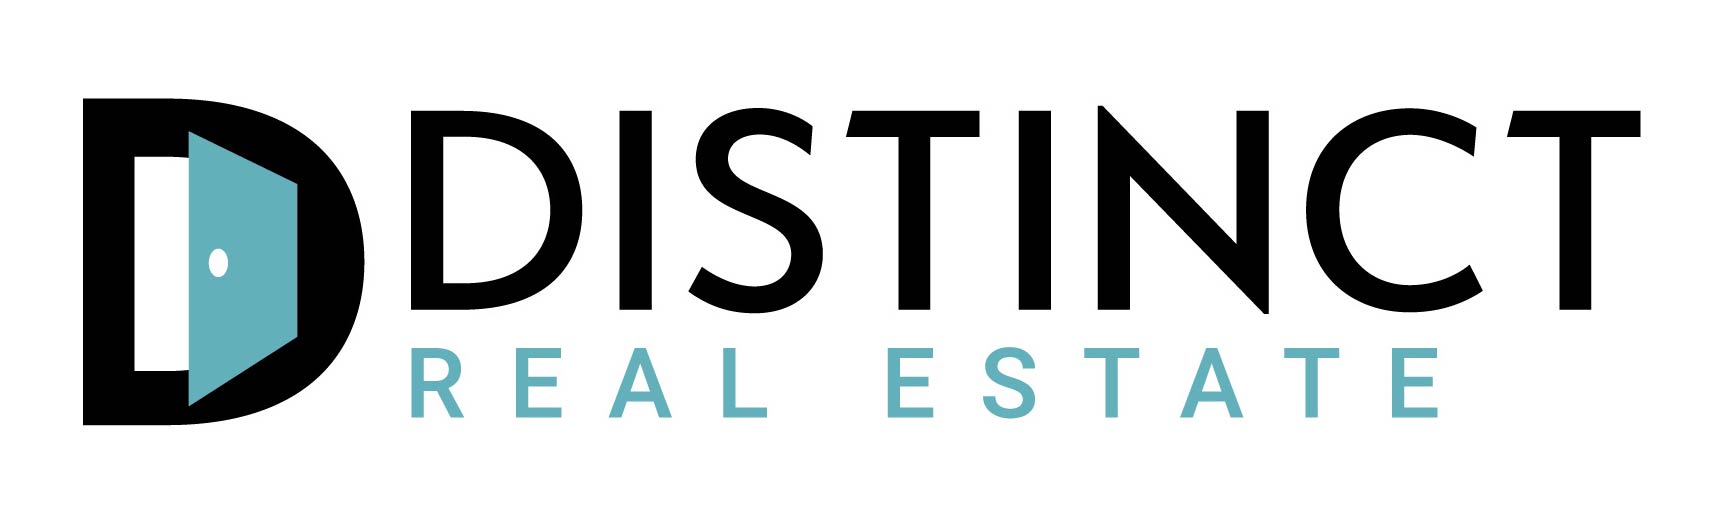 distinct real estate logo